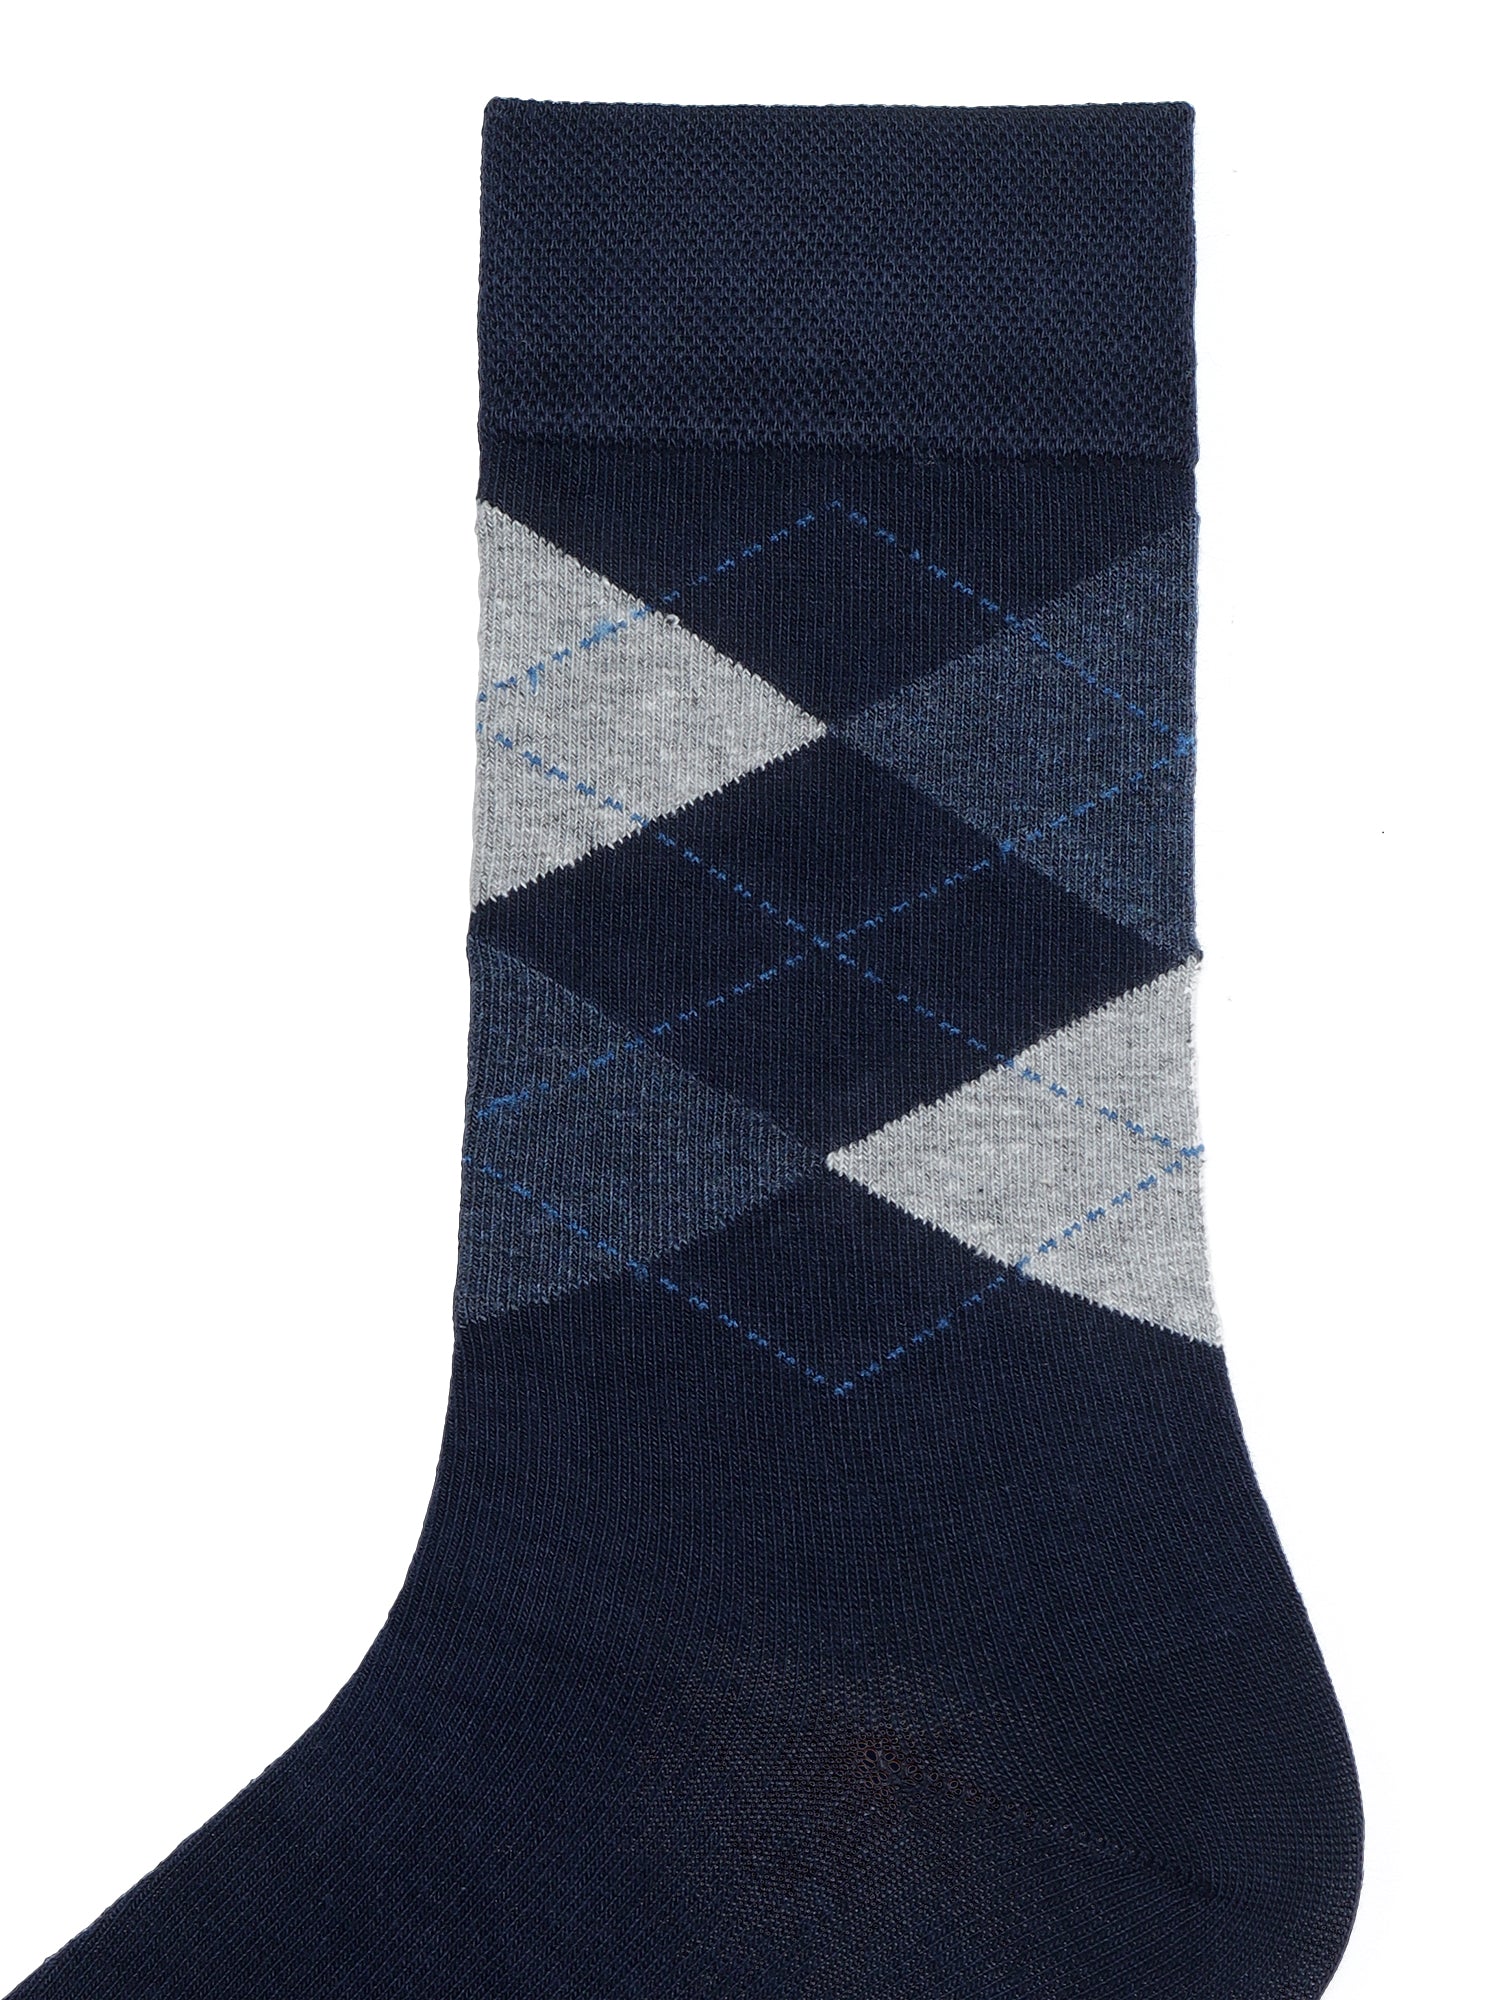 Classic Argyle Socks - Navy Blue